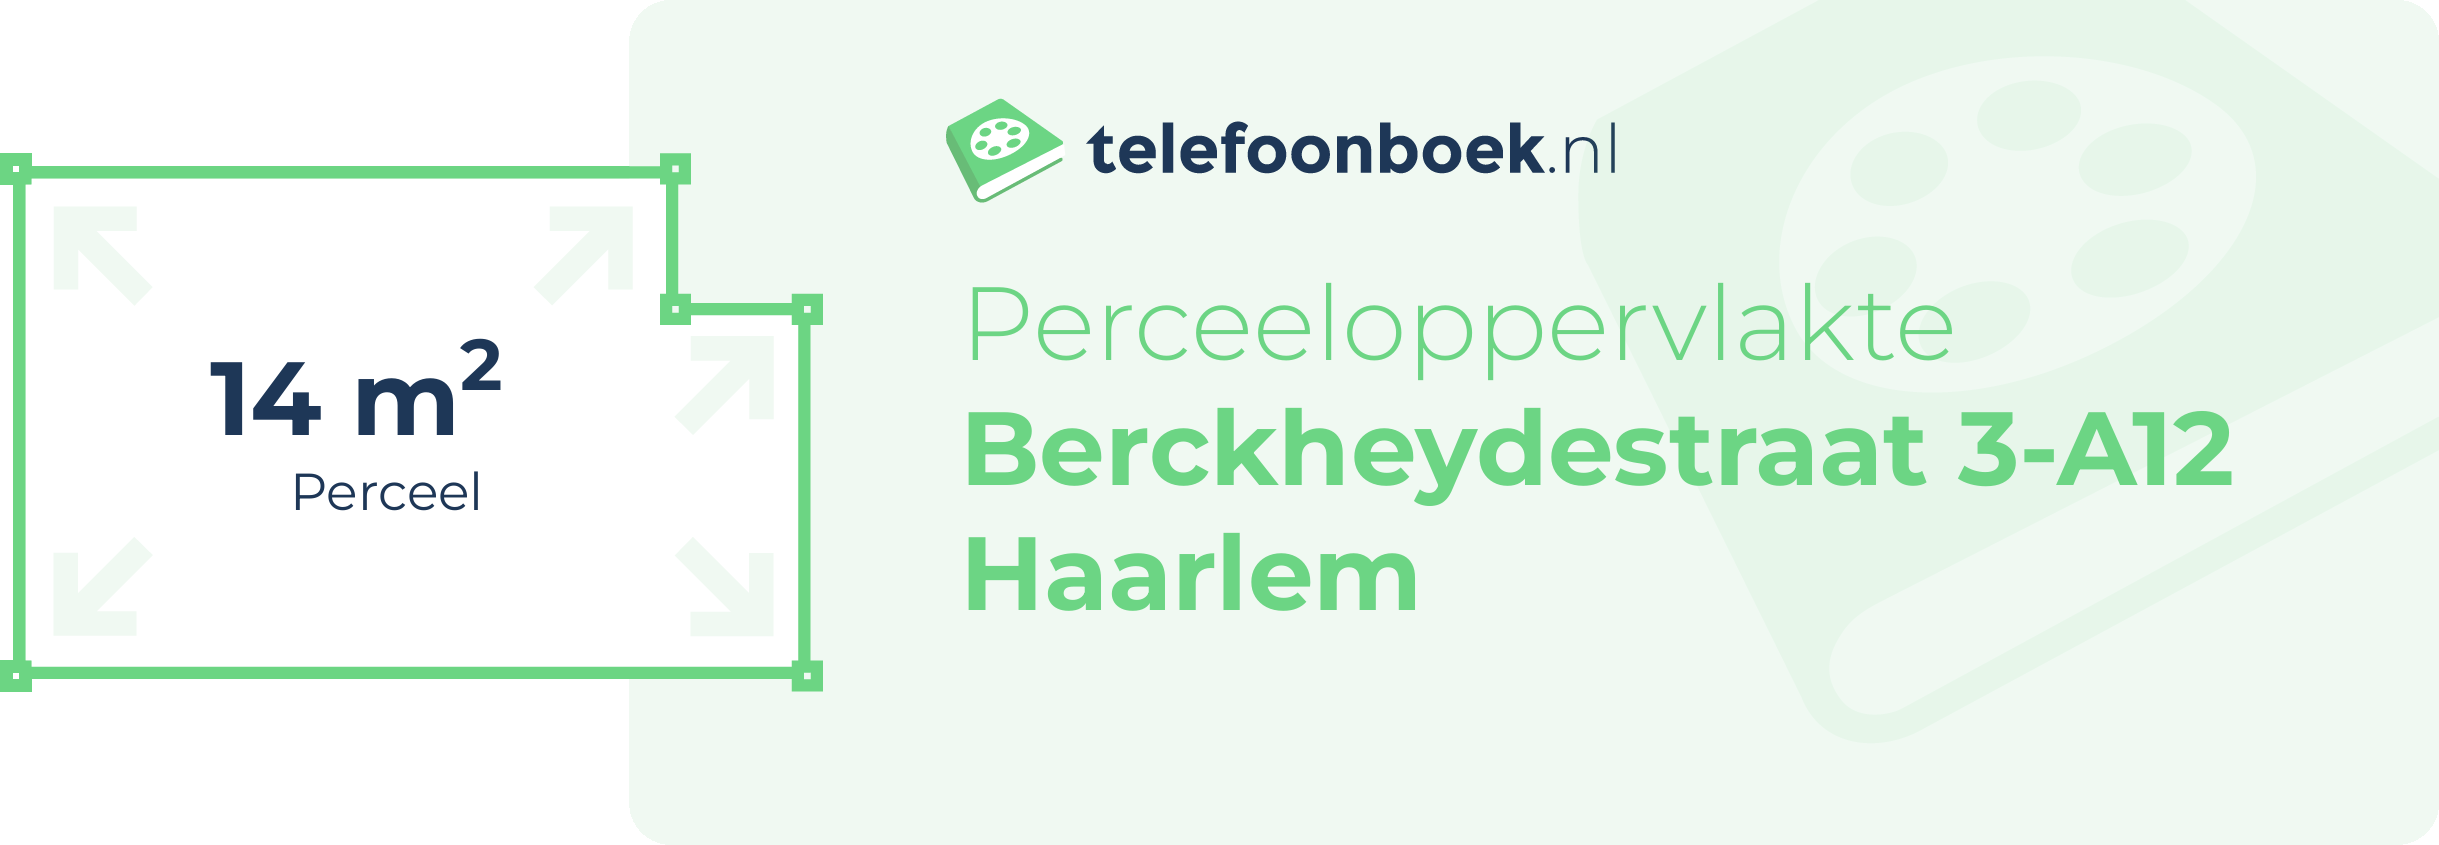 Perceeloppervlakte Berckheydestraat 3-A12 Haarlem